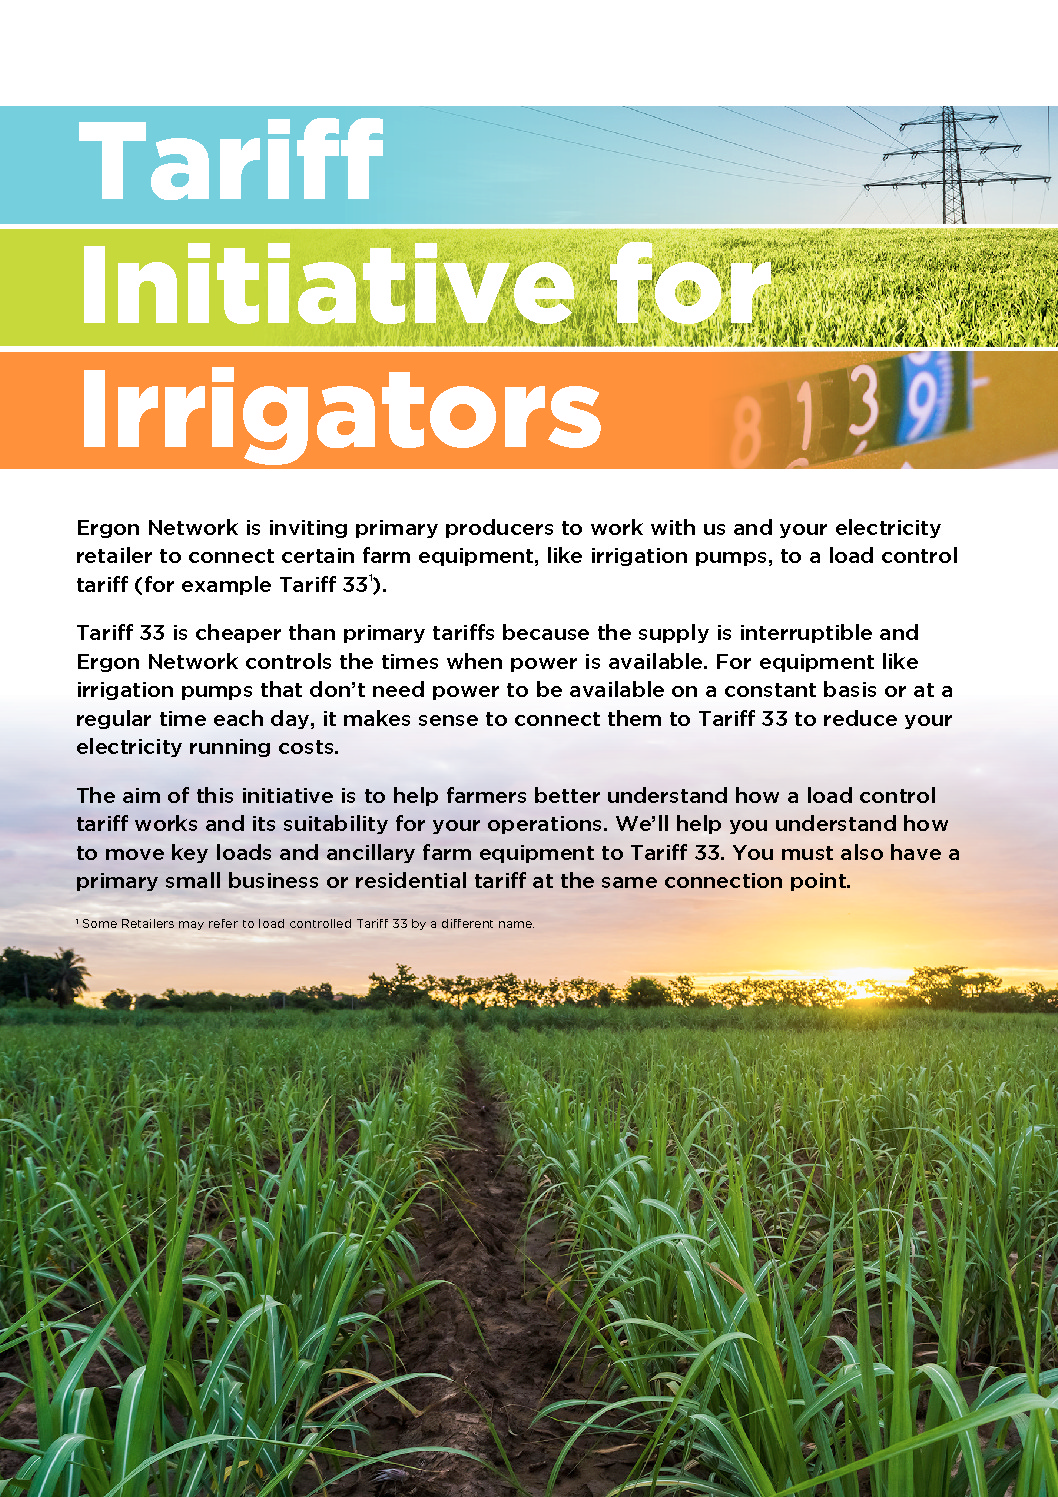 ergon-energy-load-tariff-trial-initiative-for-irrigators-kalamia-cane